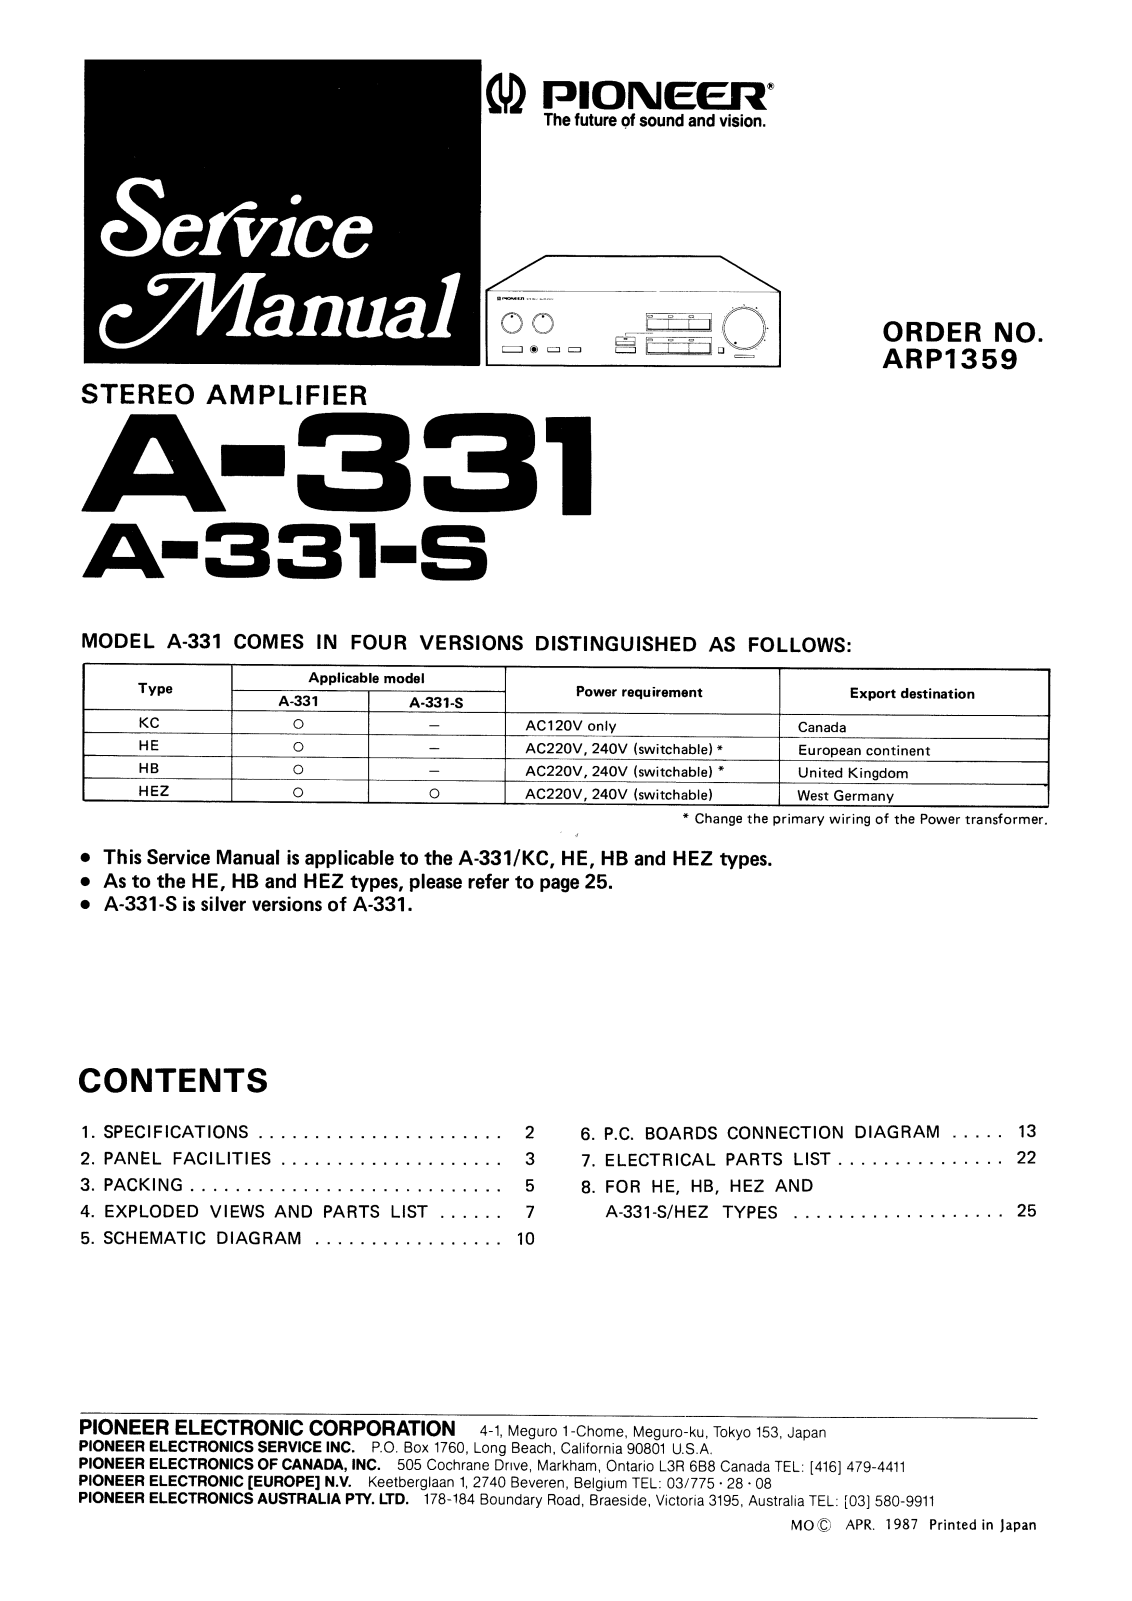 Pioneer A-331 Service Manual